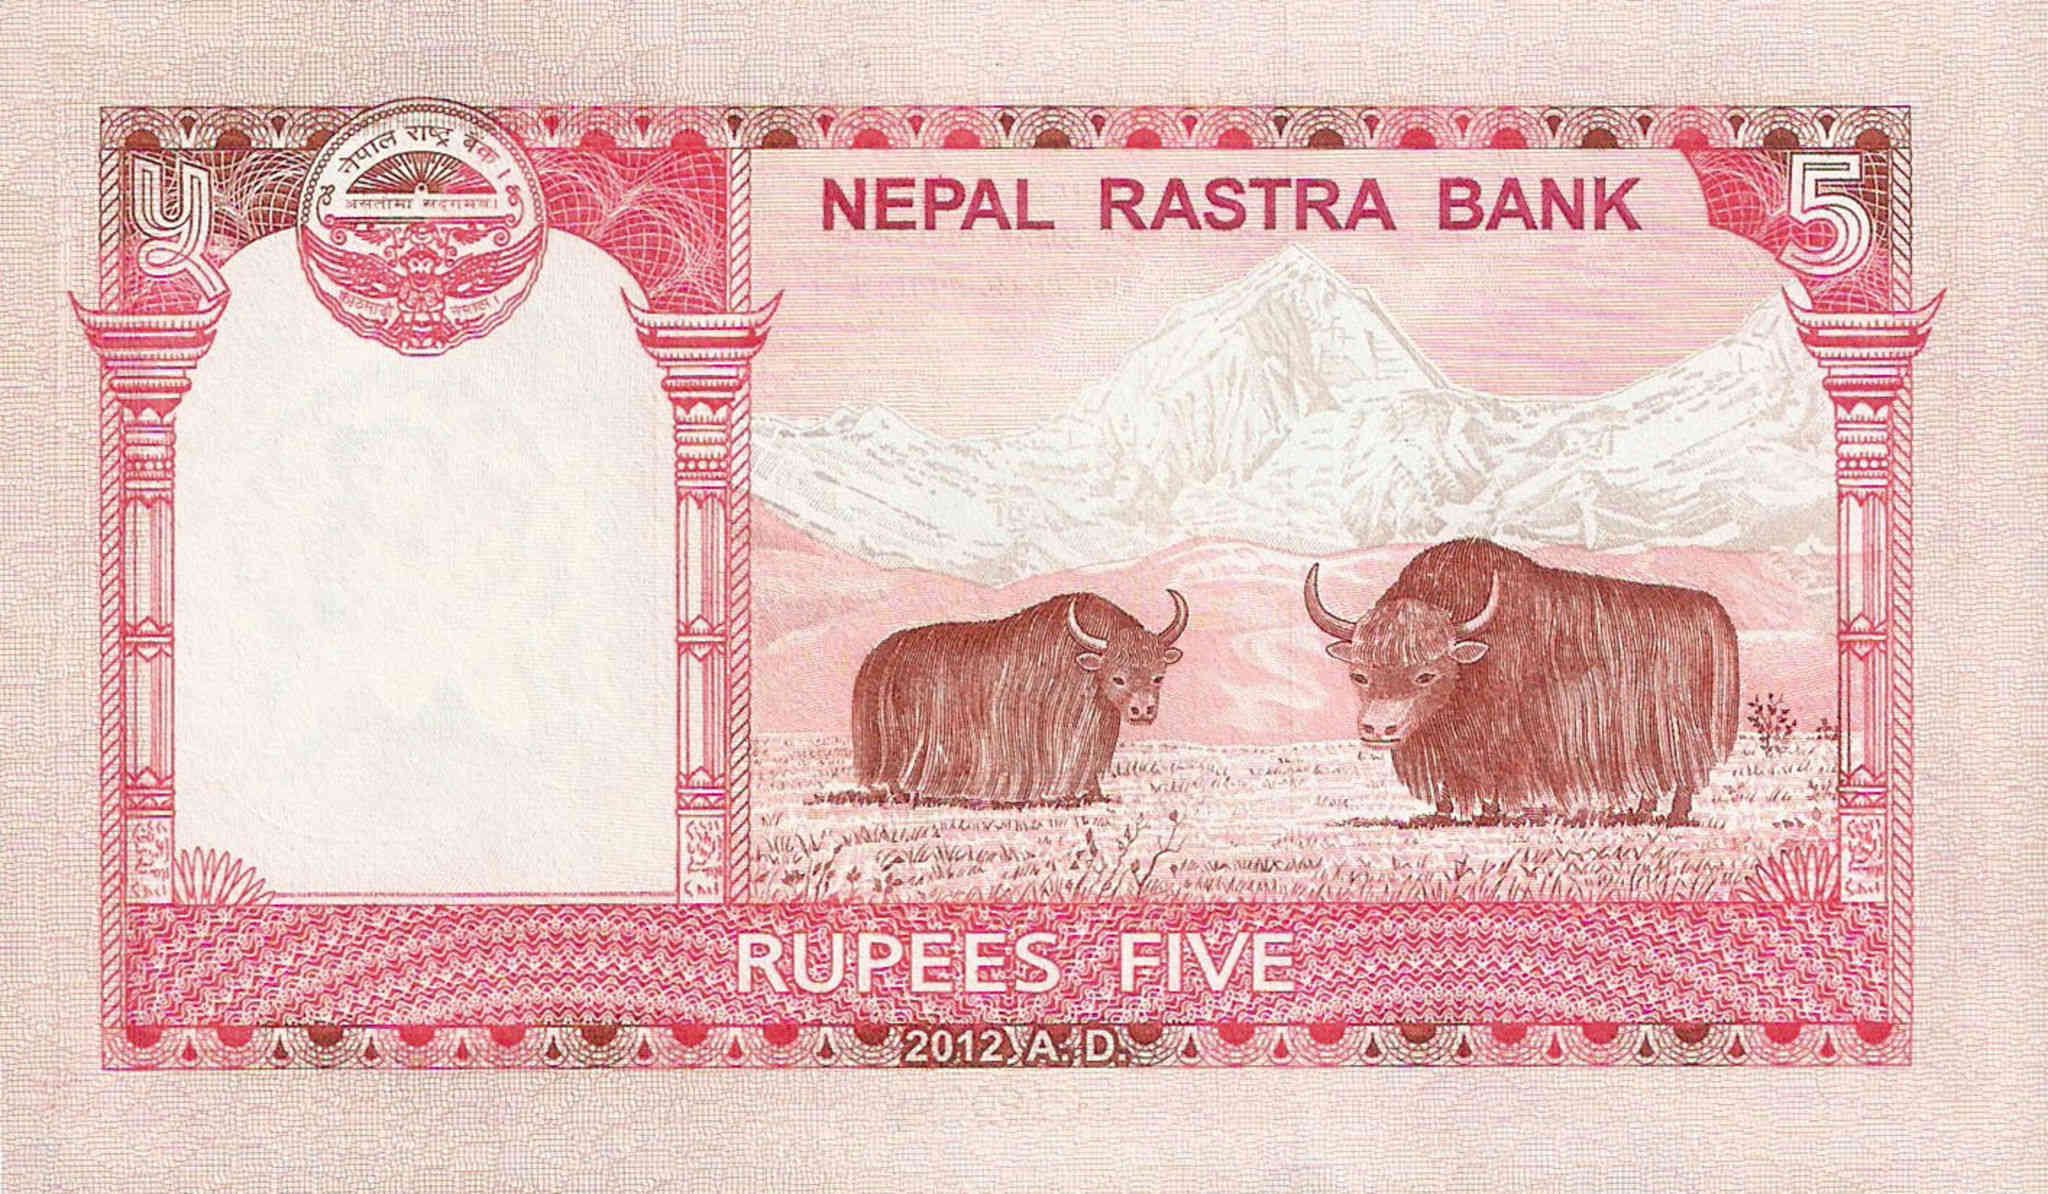 NEPAL 5 RUPEES 2012 P 69 RASTA BANK UNC